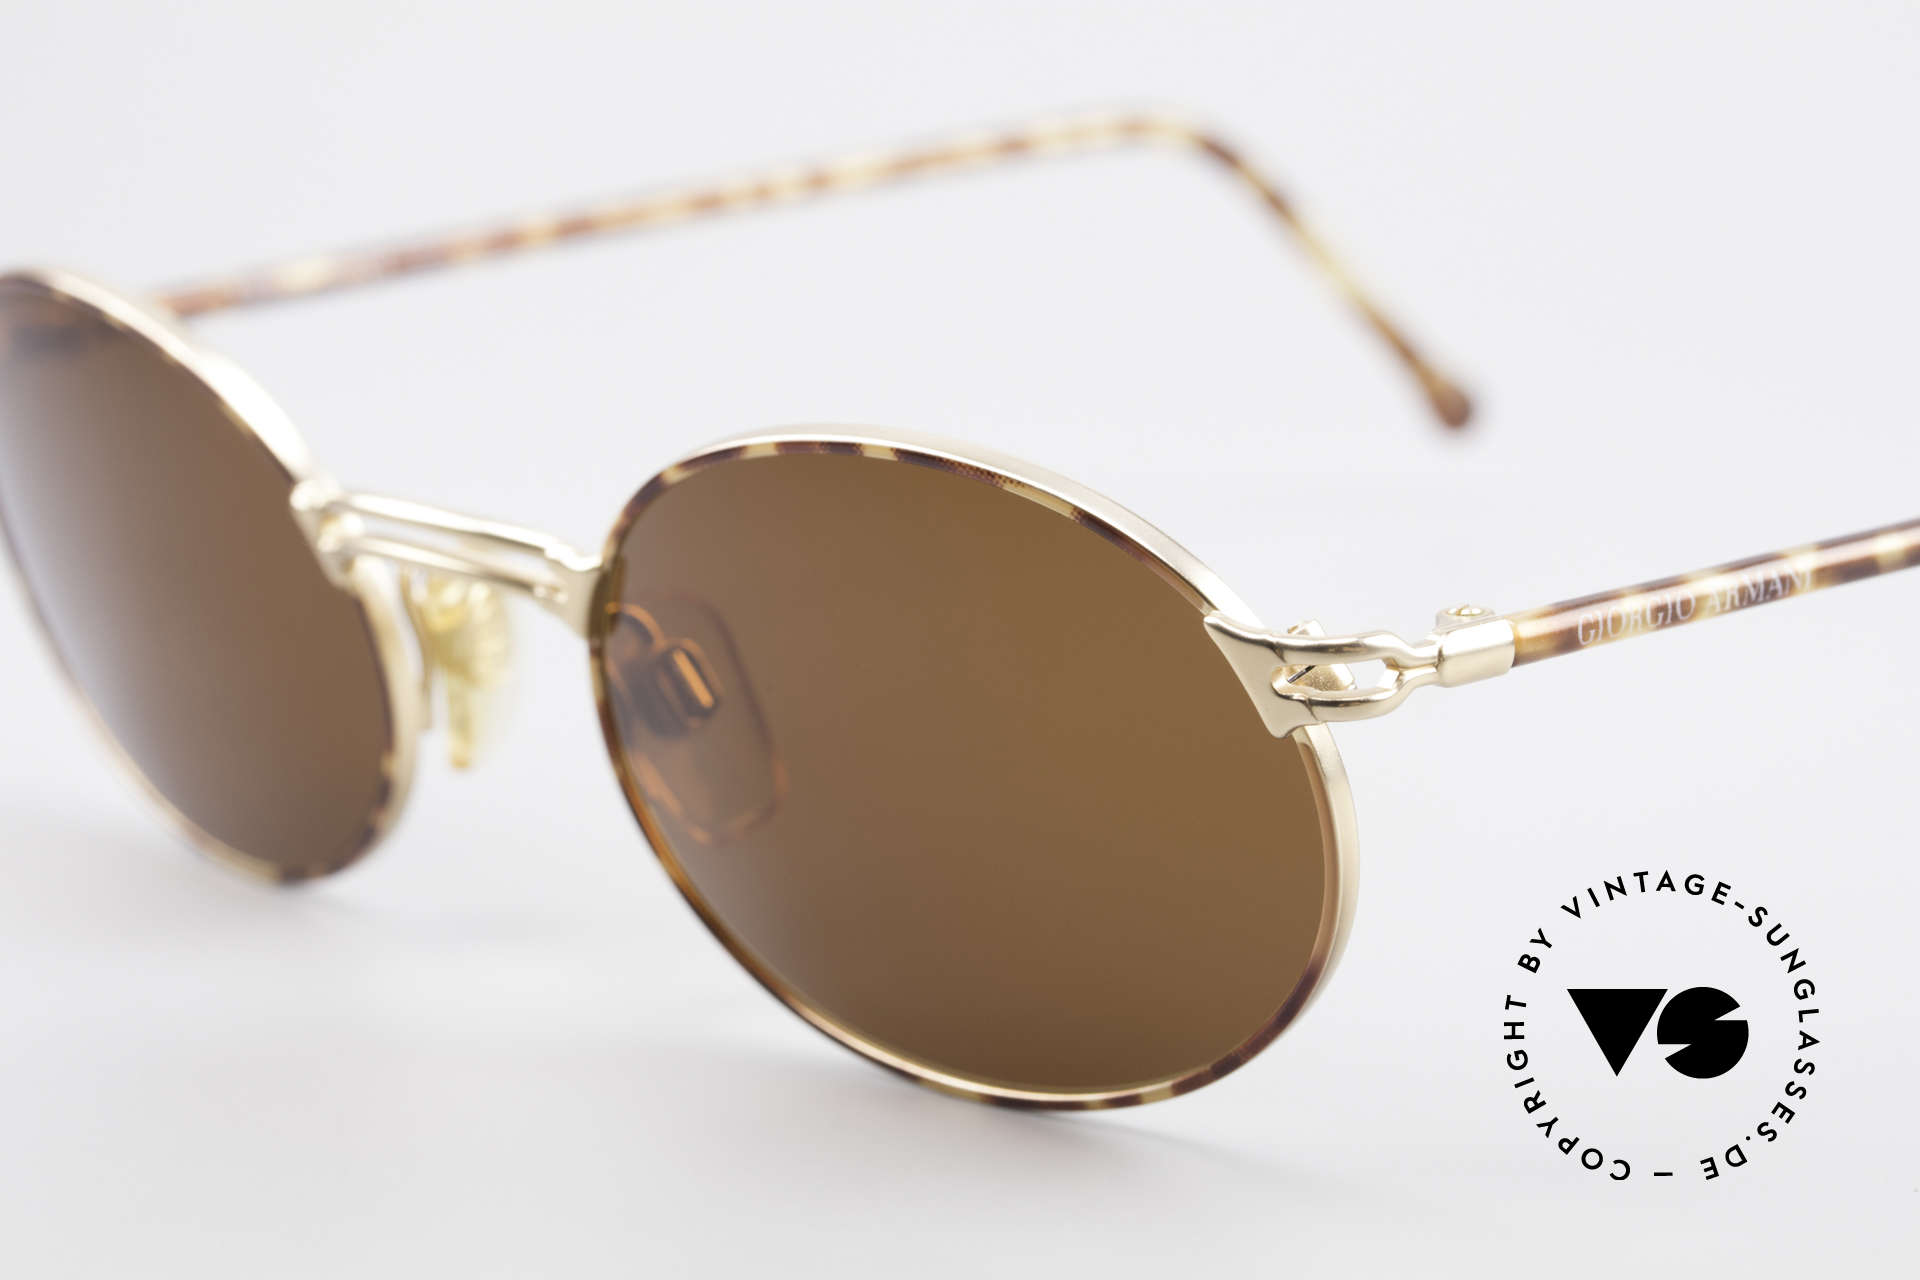 Giorgio Armani 194 Oval 90s Sunglasses No Retro, with dark brown sun lenses (for 100% UV protection), Made for Men and Women